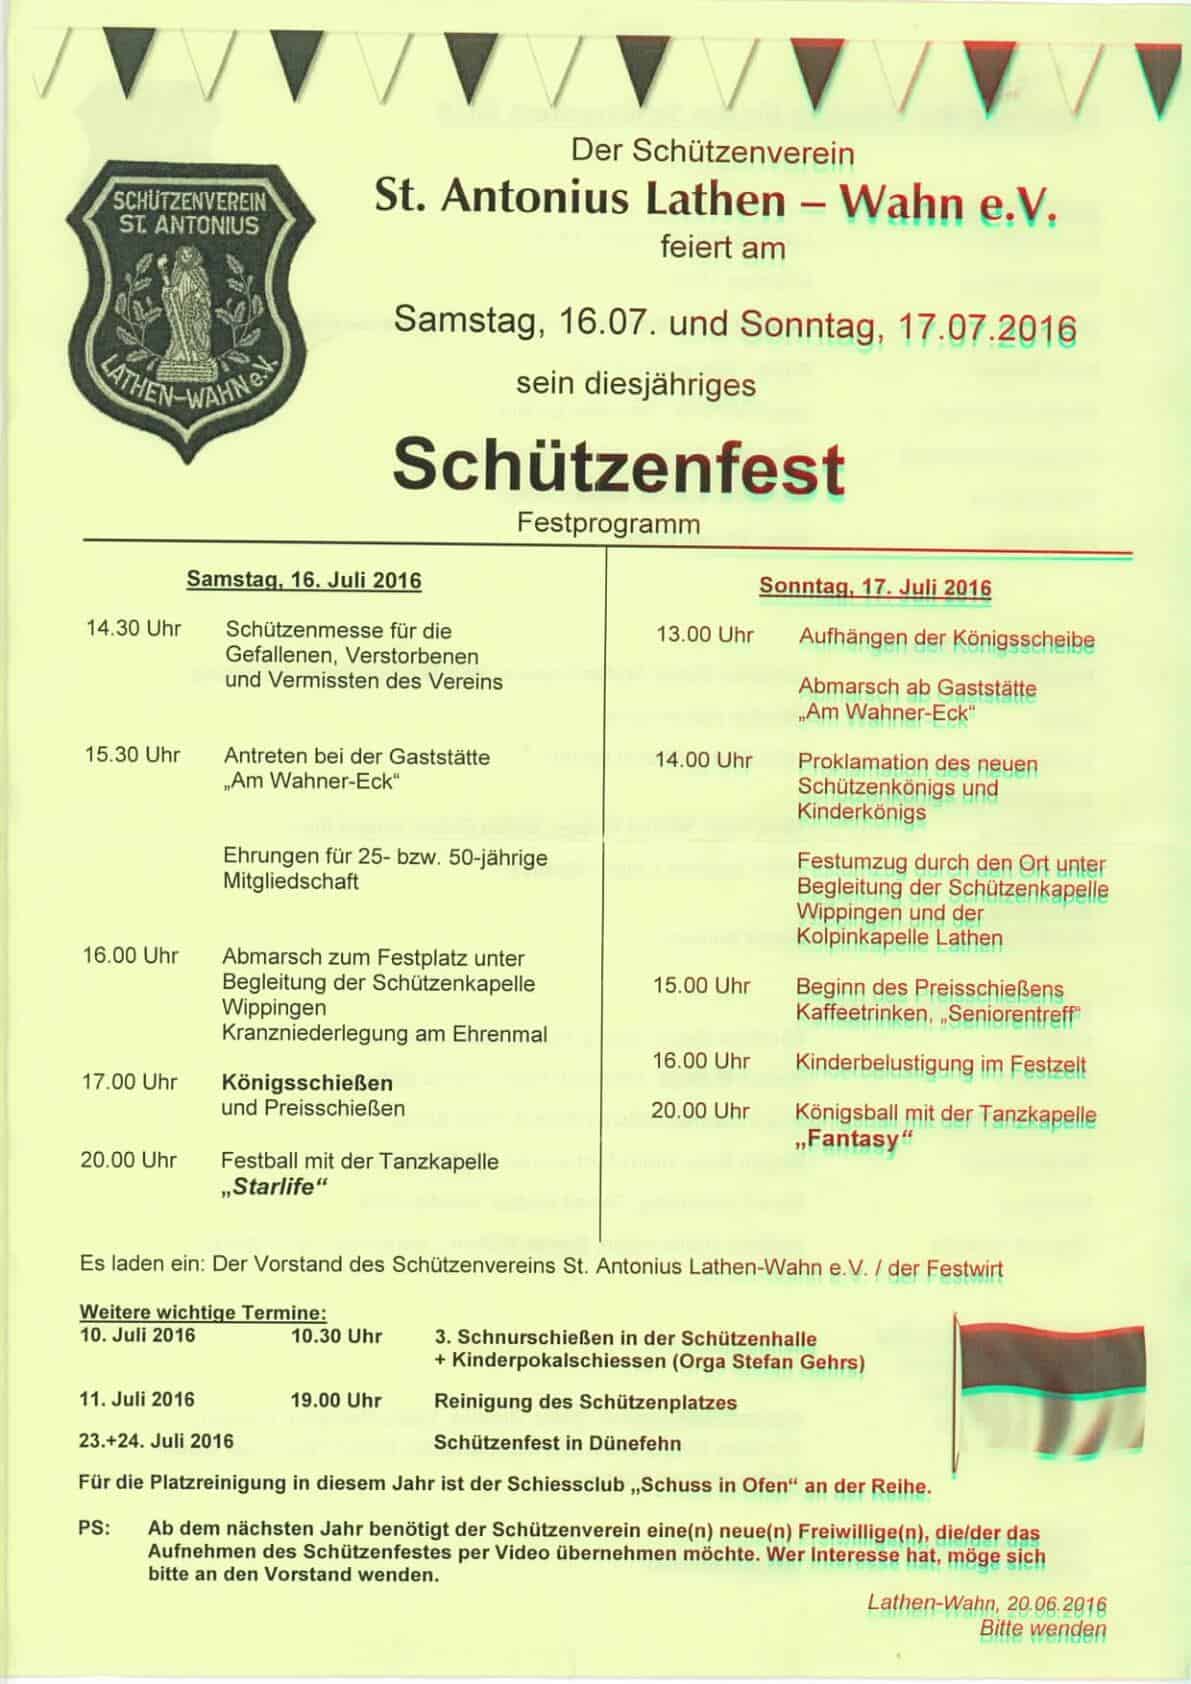 Festprogramm Schützenfest Lathen-Wahn